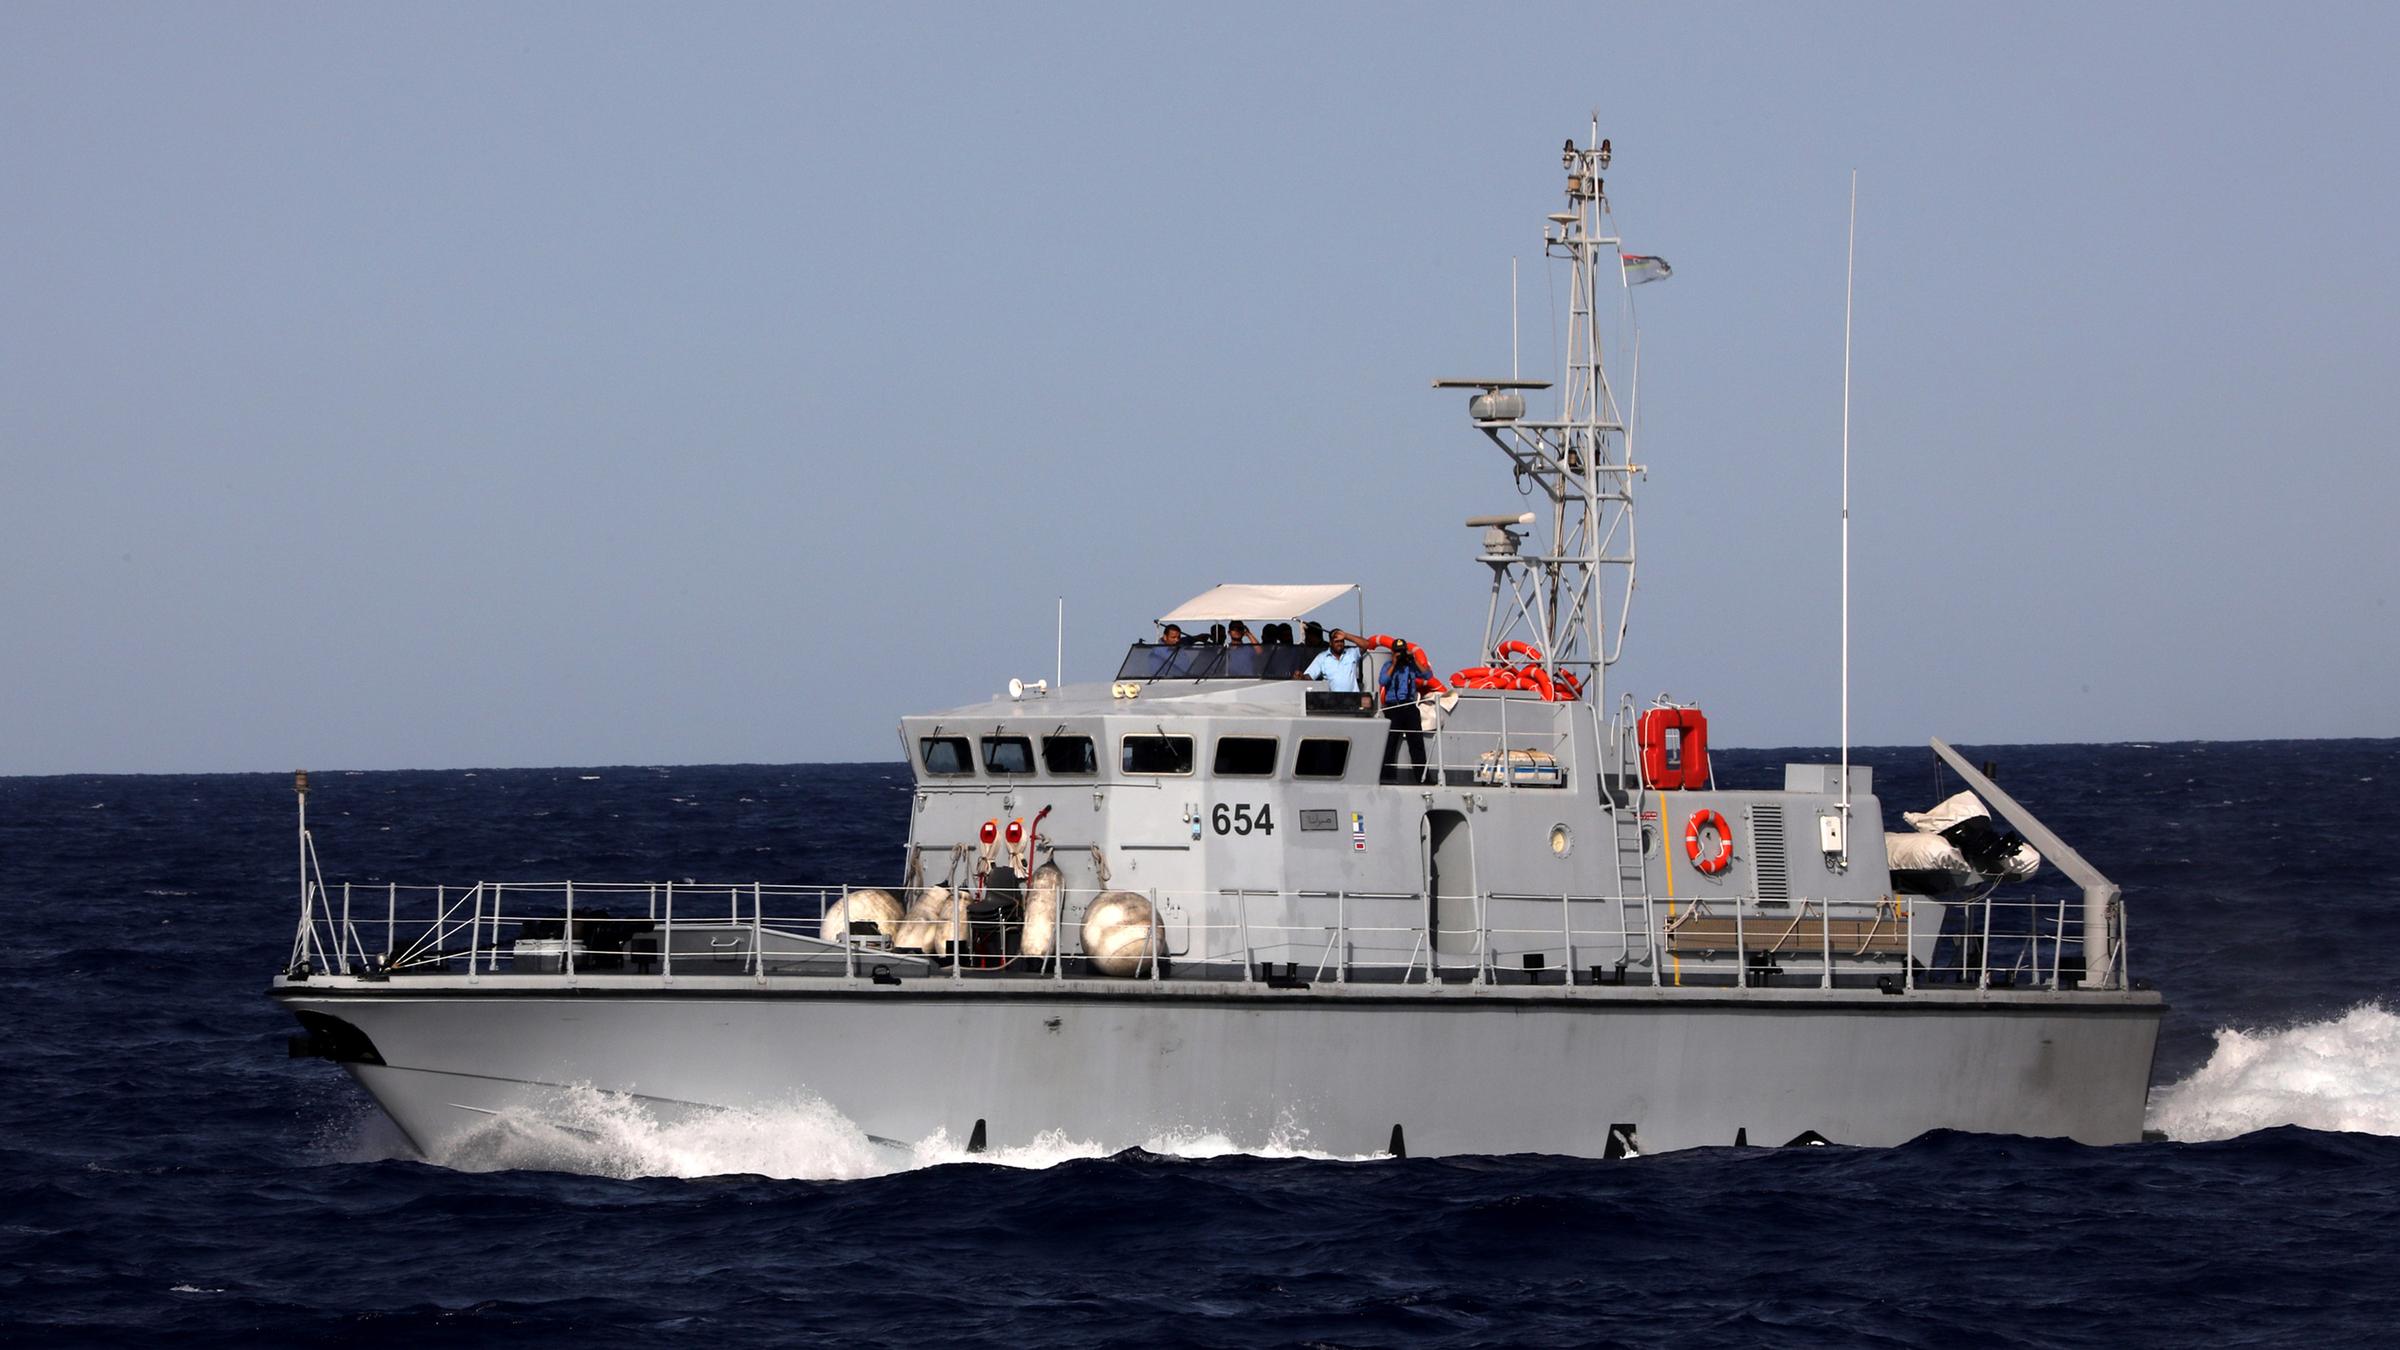 A Libyan Coast Guard ship is patrolling the Mediterranean.